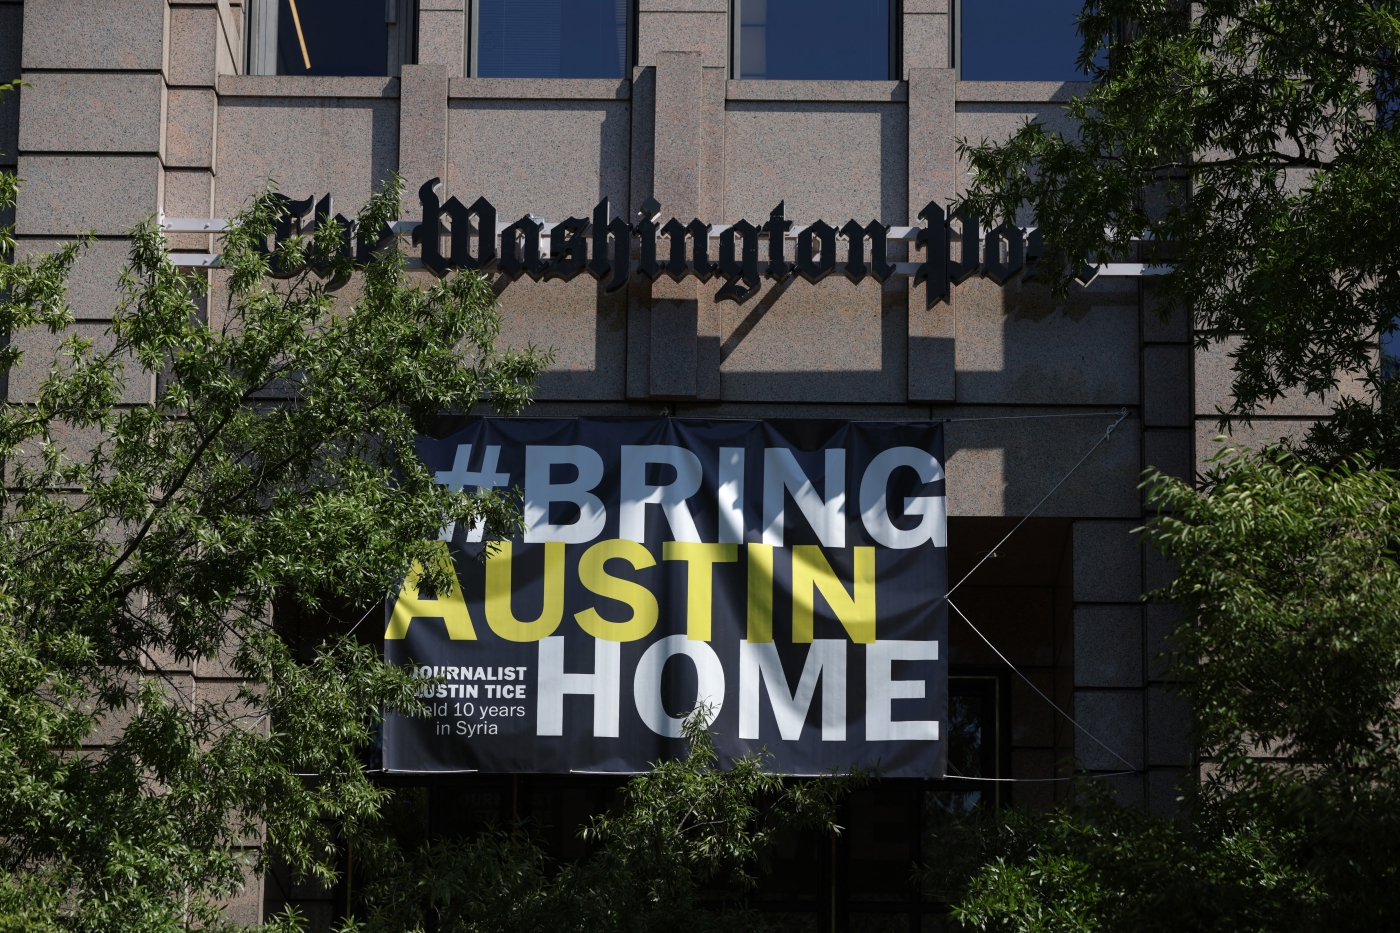 The 'Bring Austin Home' banner 